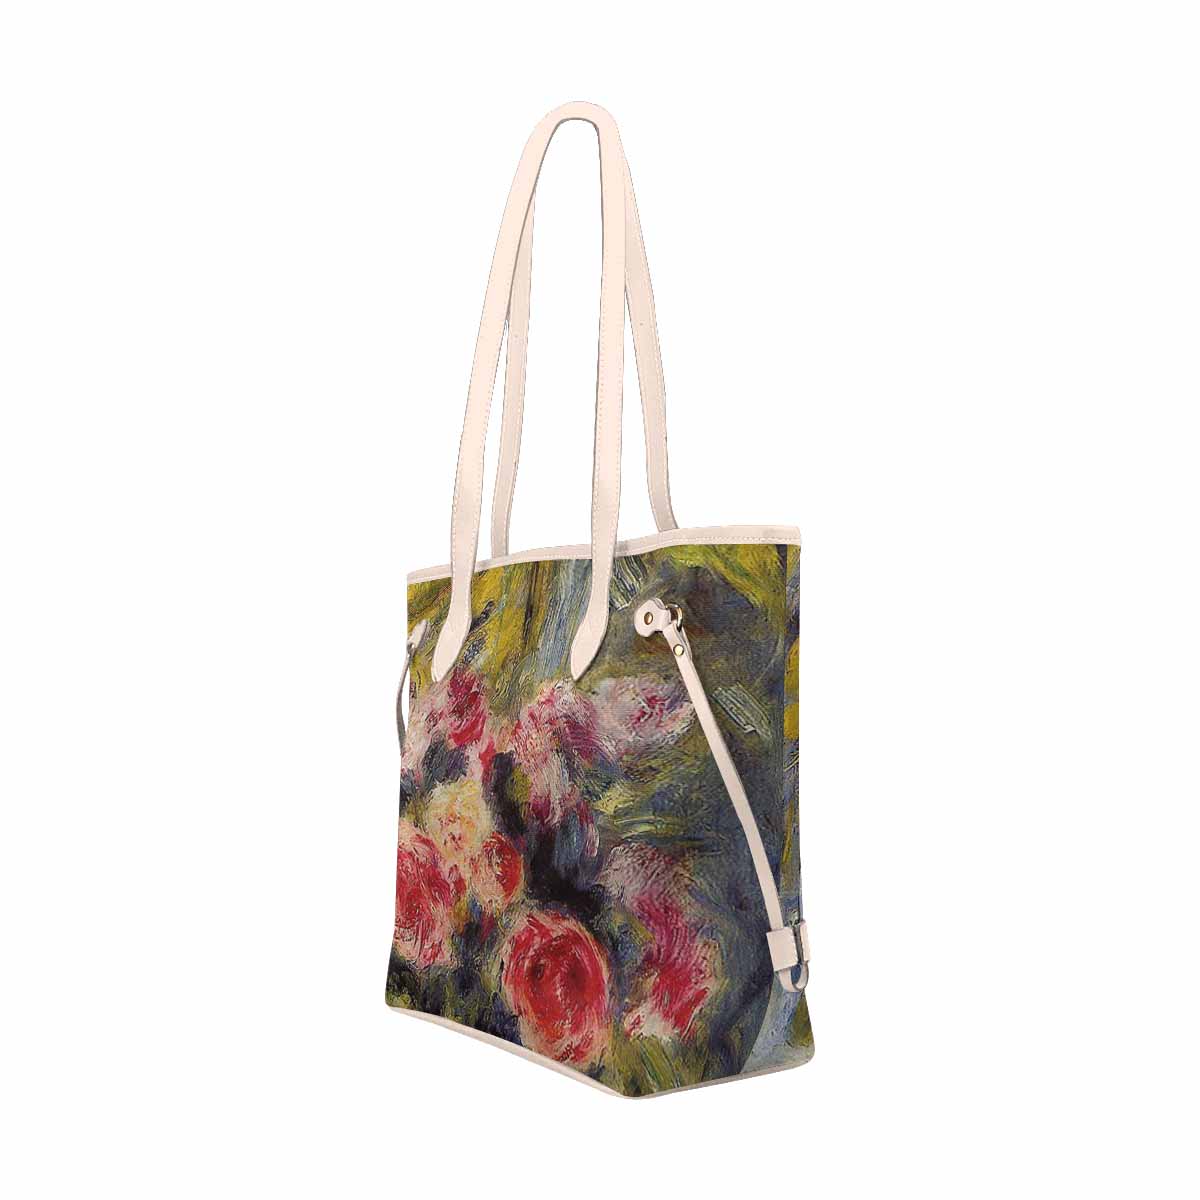 Vintage Floral Handbag, Classic Handbag, Mod 1695361 Design 26 BEIGE/TAN TRIM